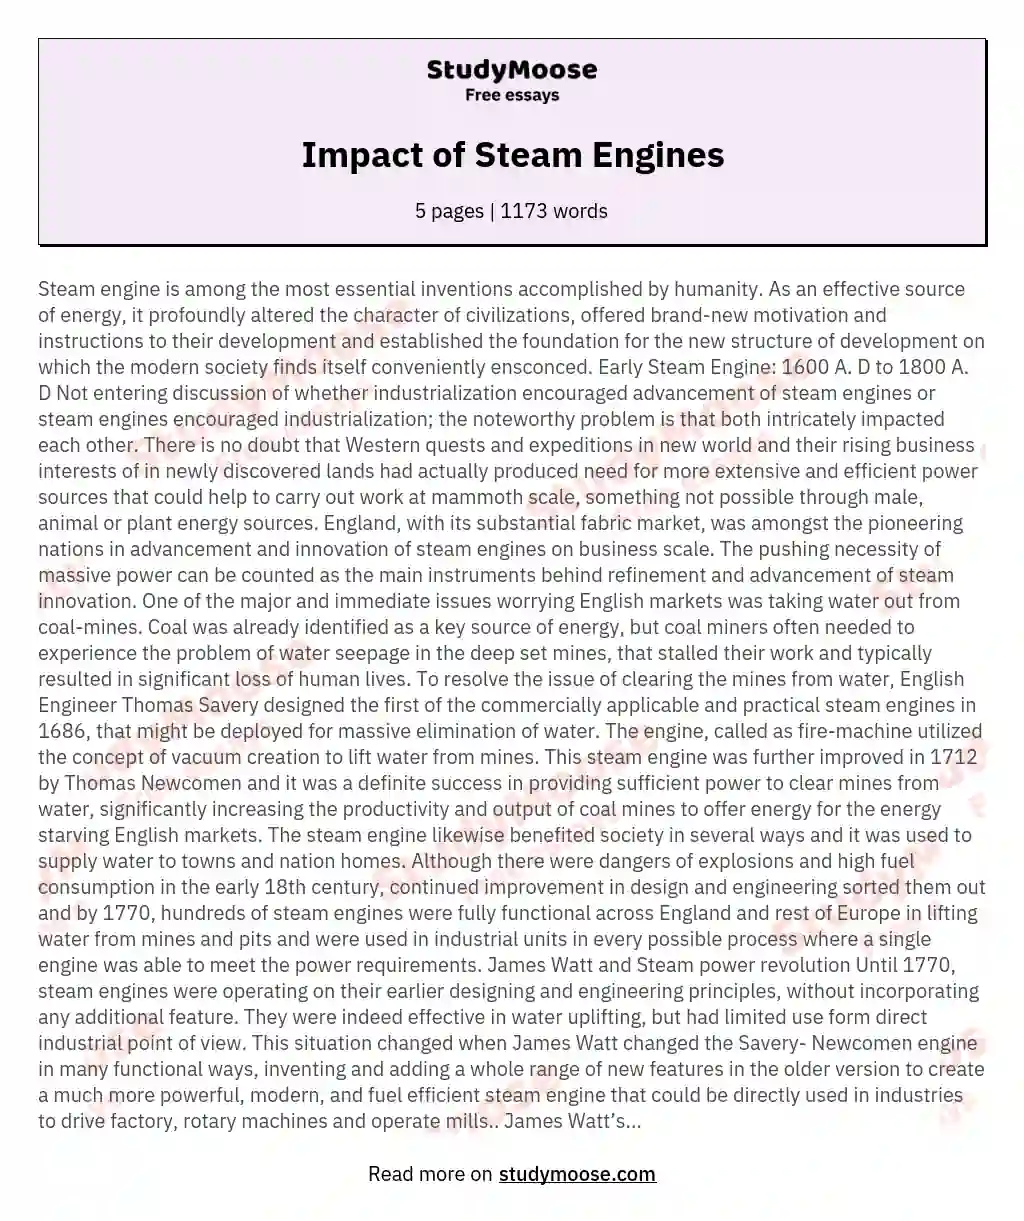 Impact of Steam Engines essay